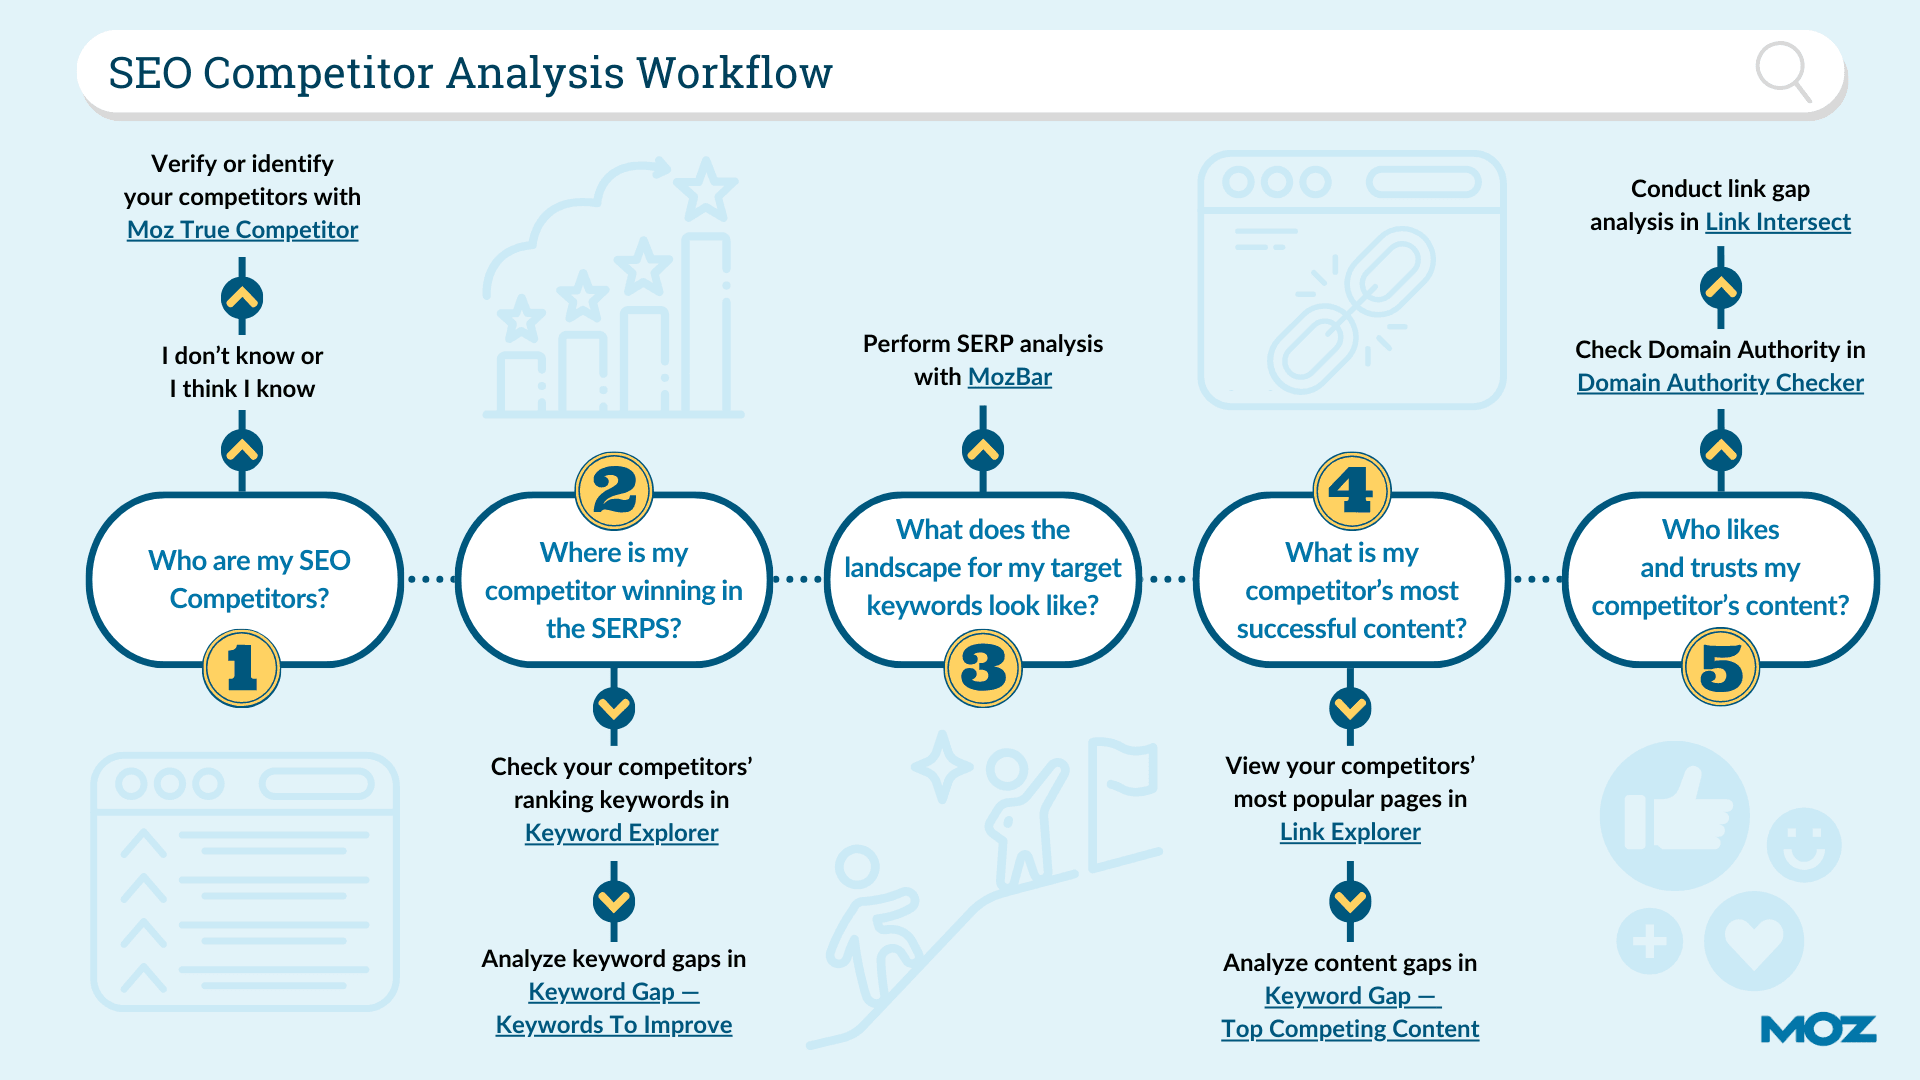 SEO Competitor Analysis Workflow